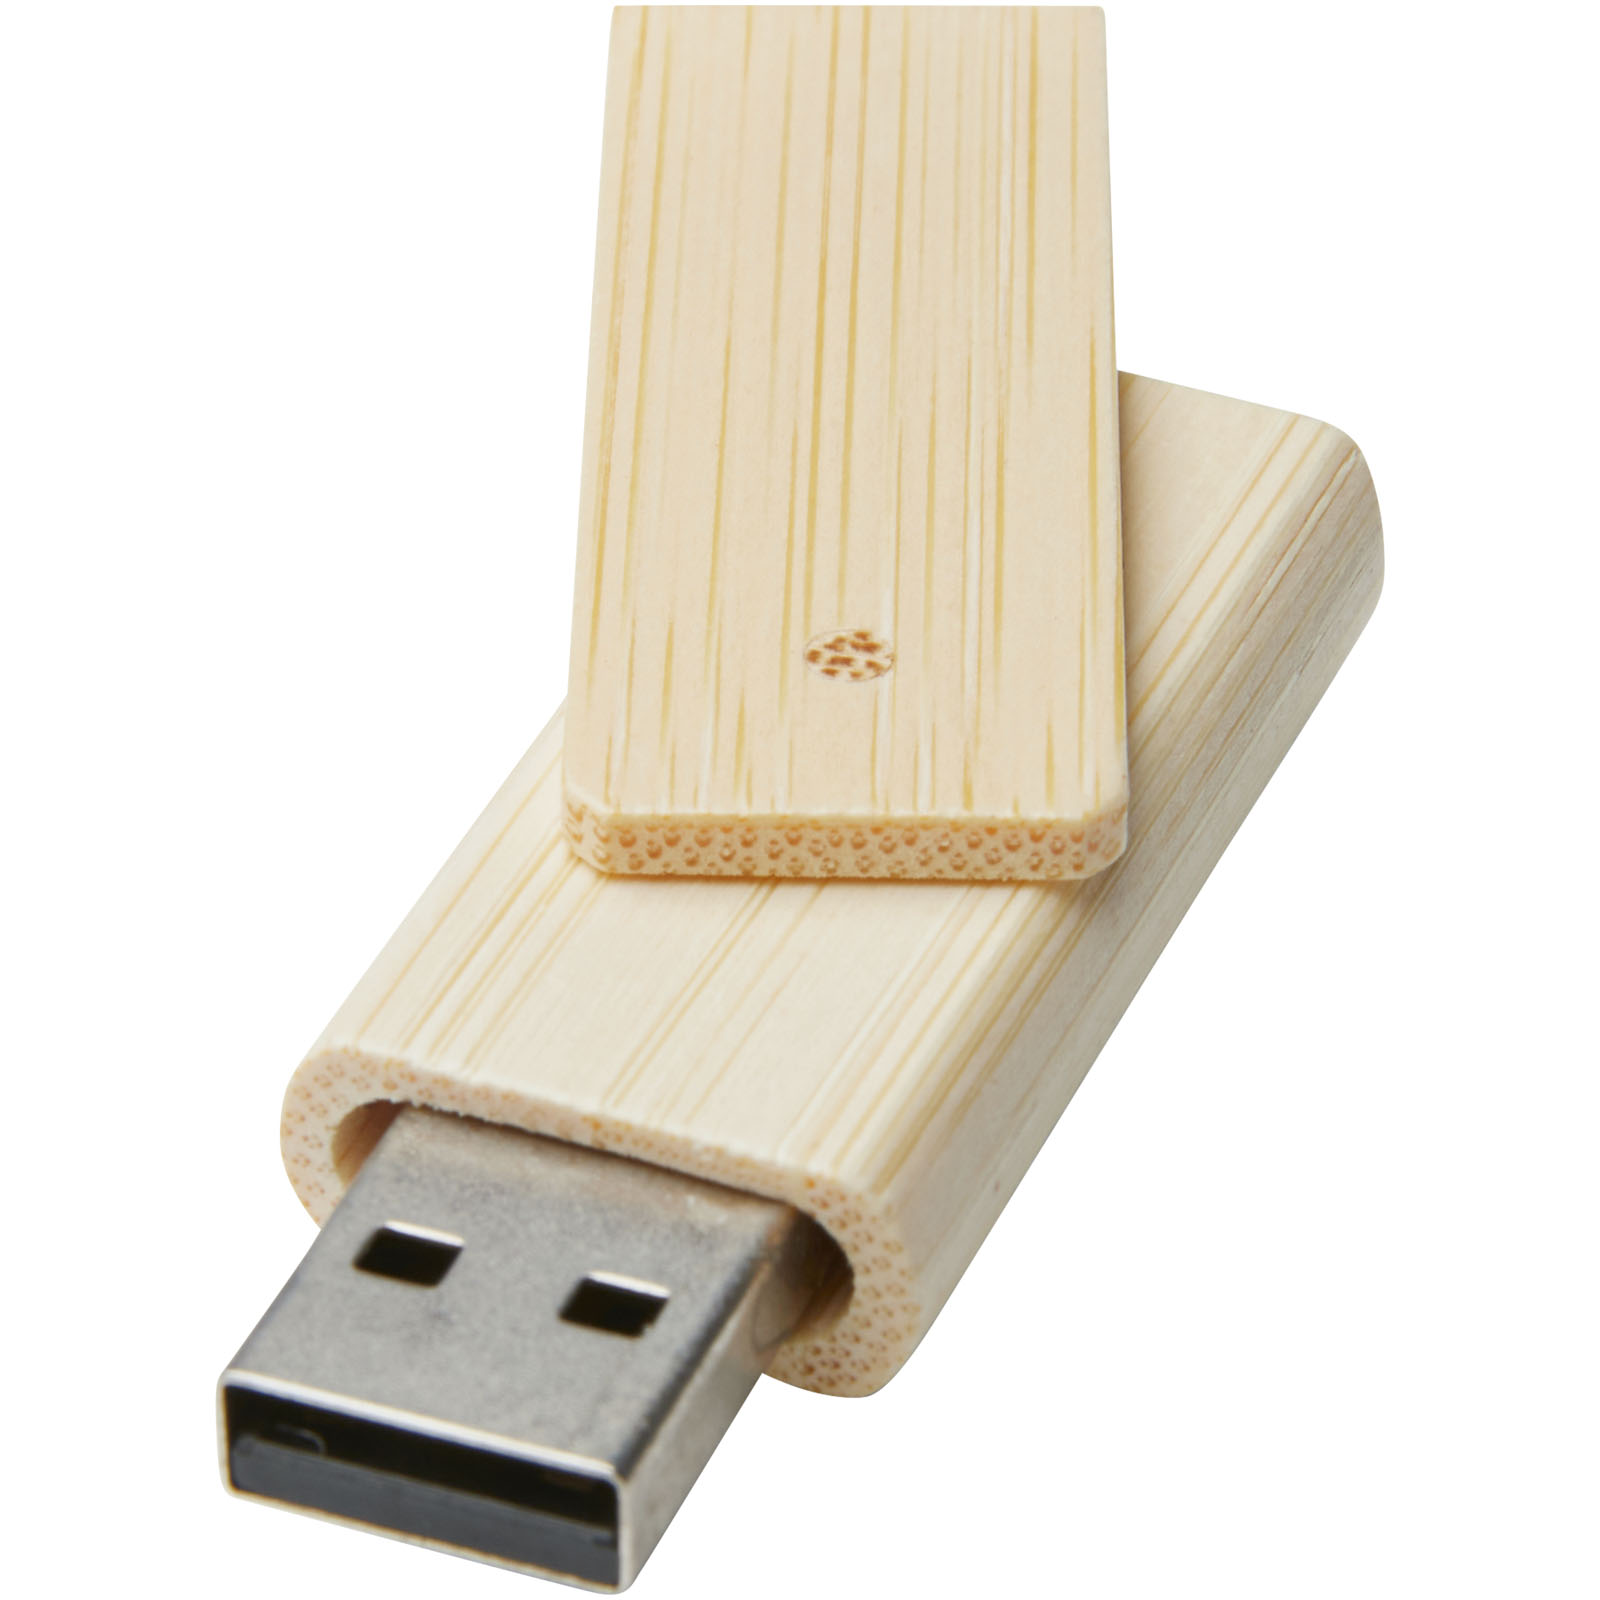 Clé USB 2.0 BambooRotate - 16GB - Bourron-Marlotte - Zaprinta France